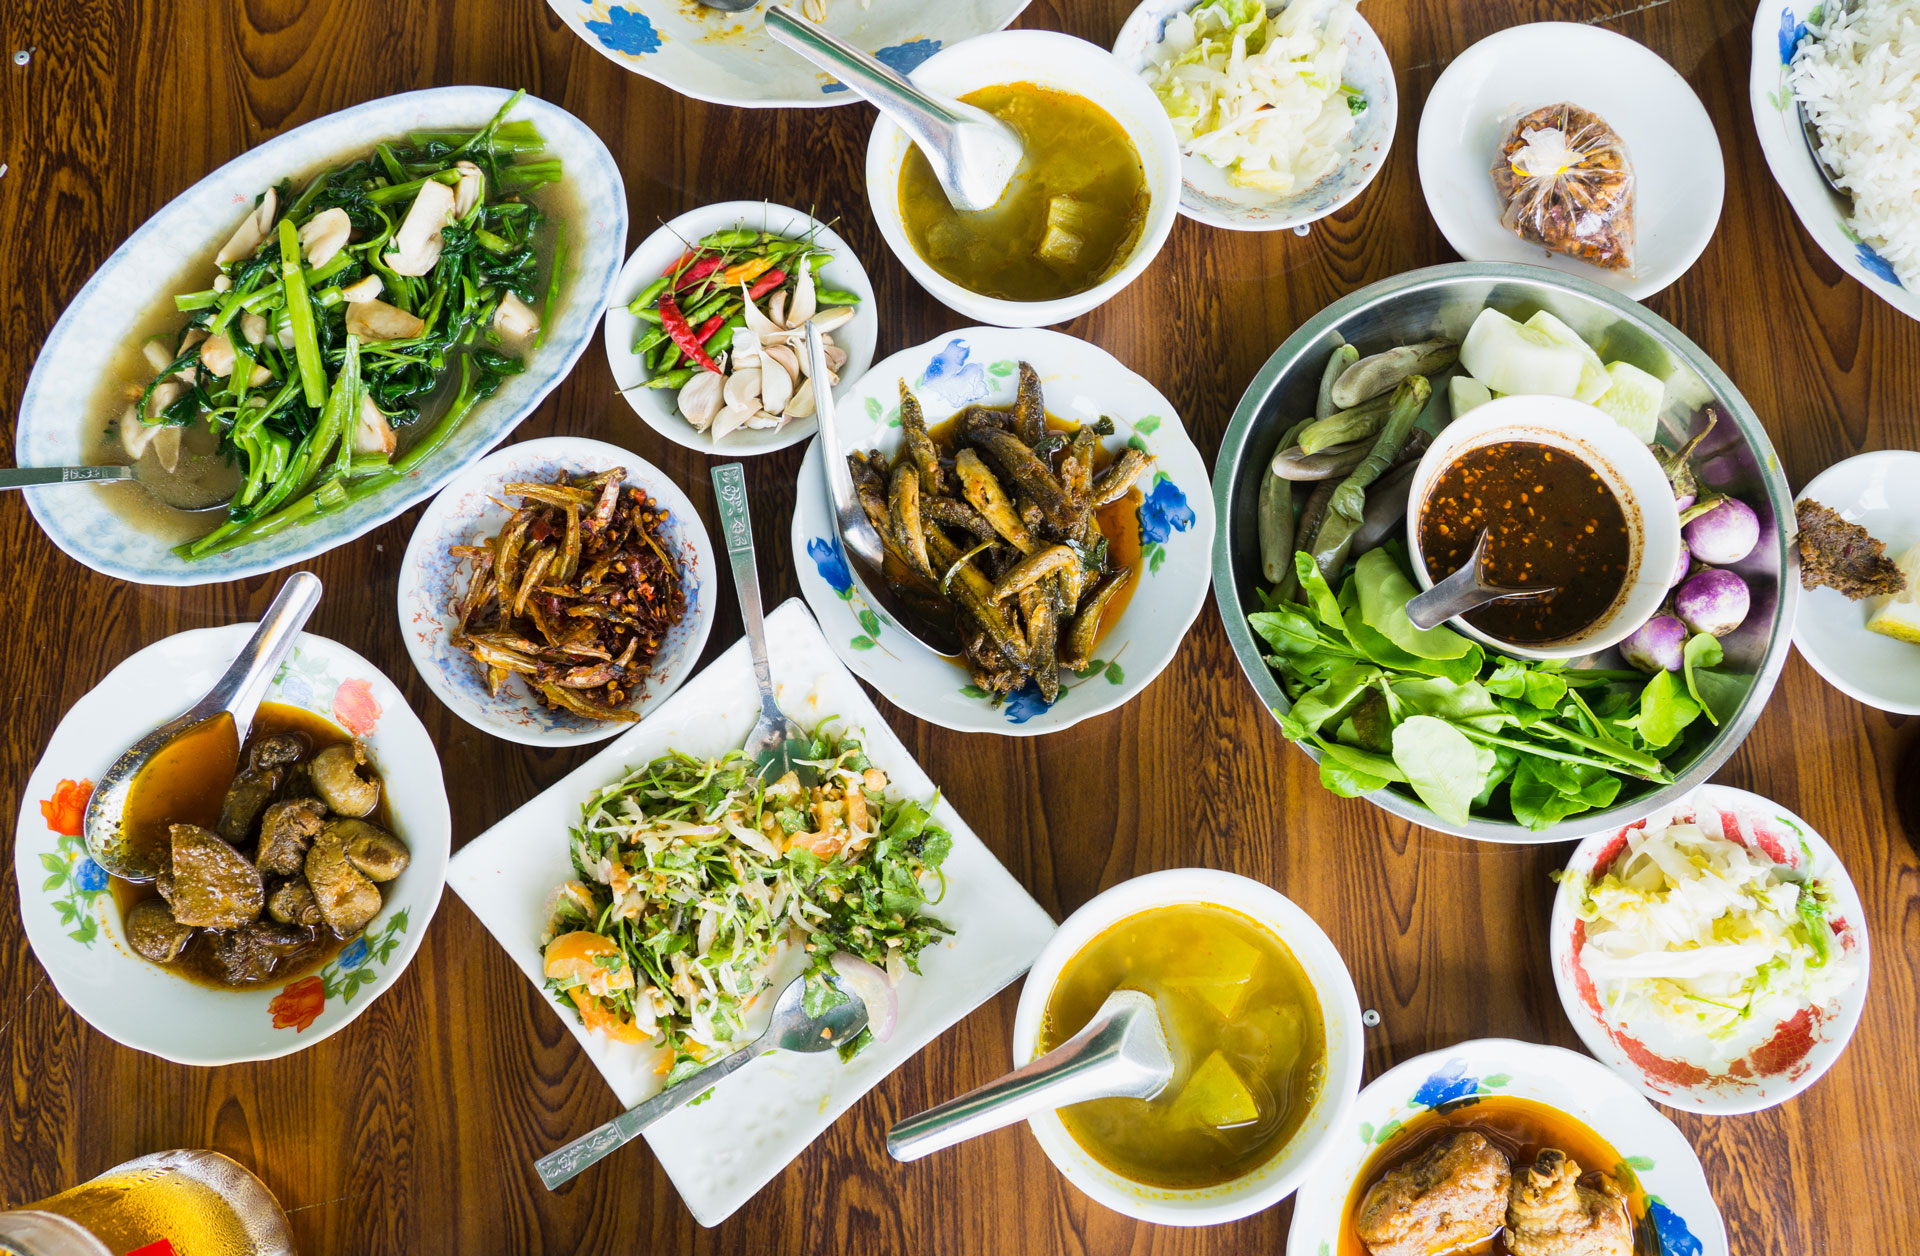 Try food in Myanmar - TourAmigo Blog